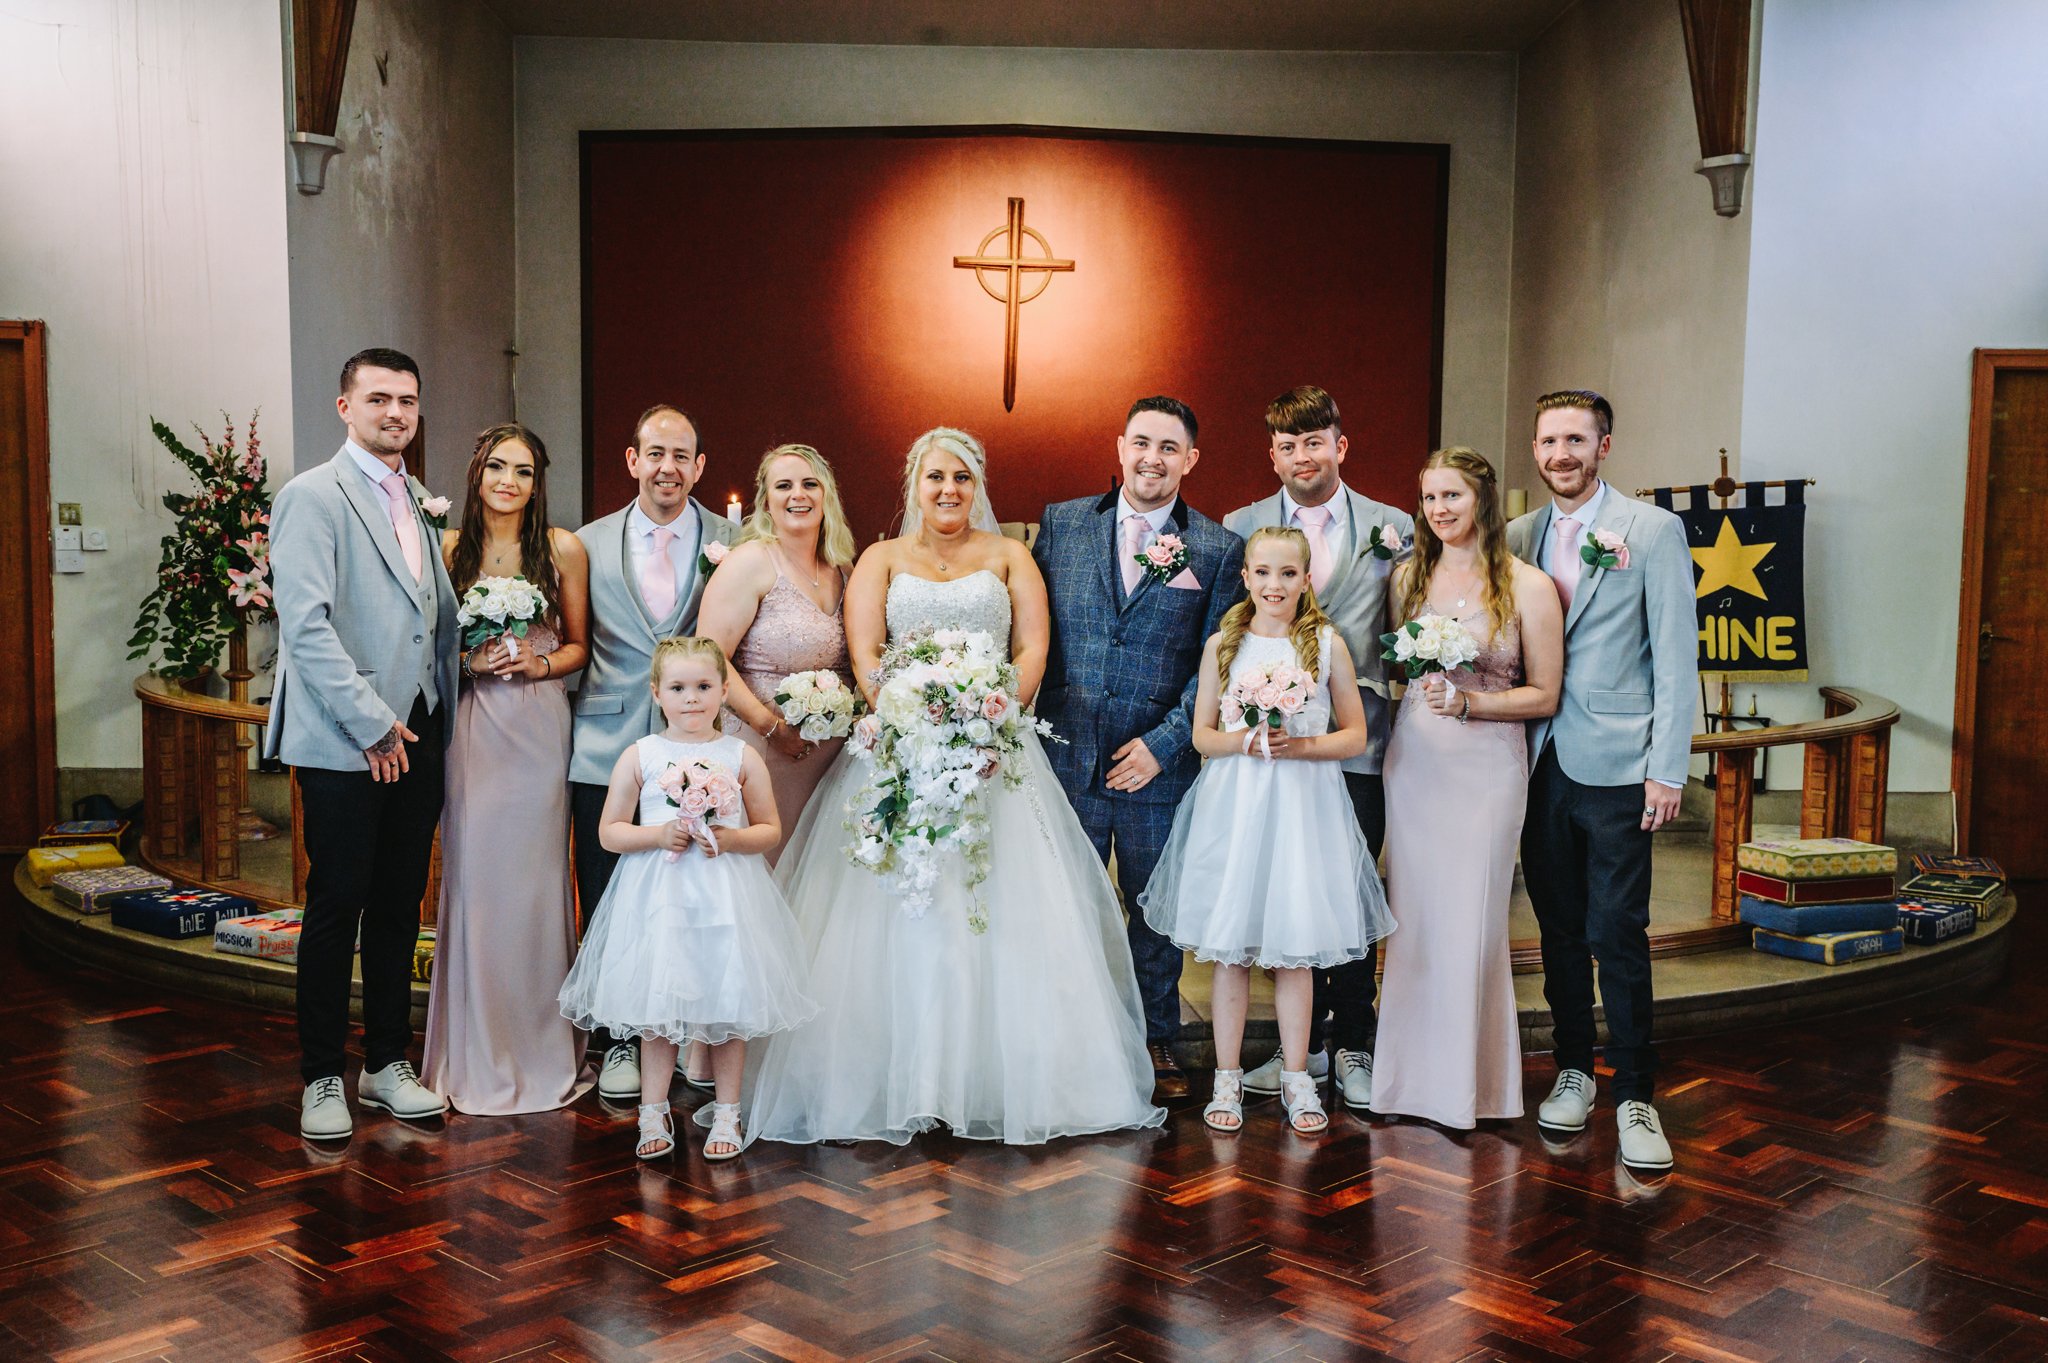 Saint-Clares-Church-Newton-Aycliffe-wedding-photograper (10 of 13).jpg